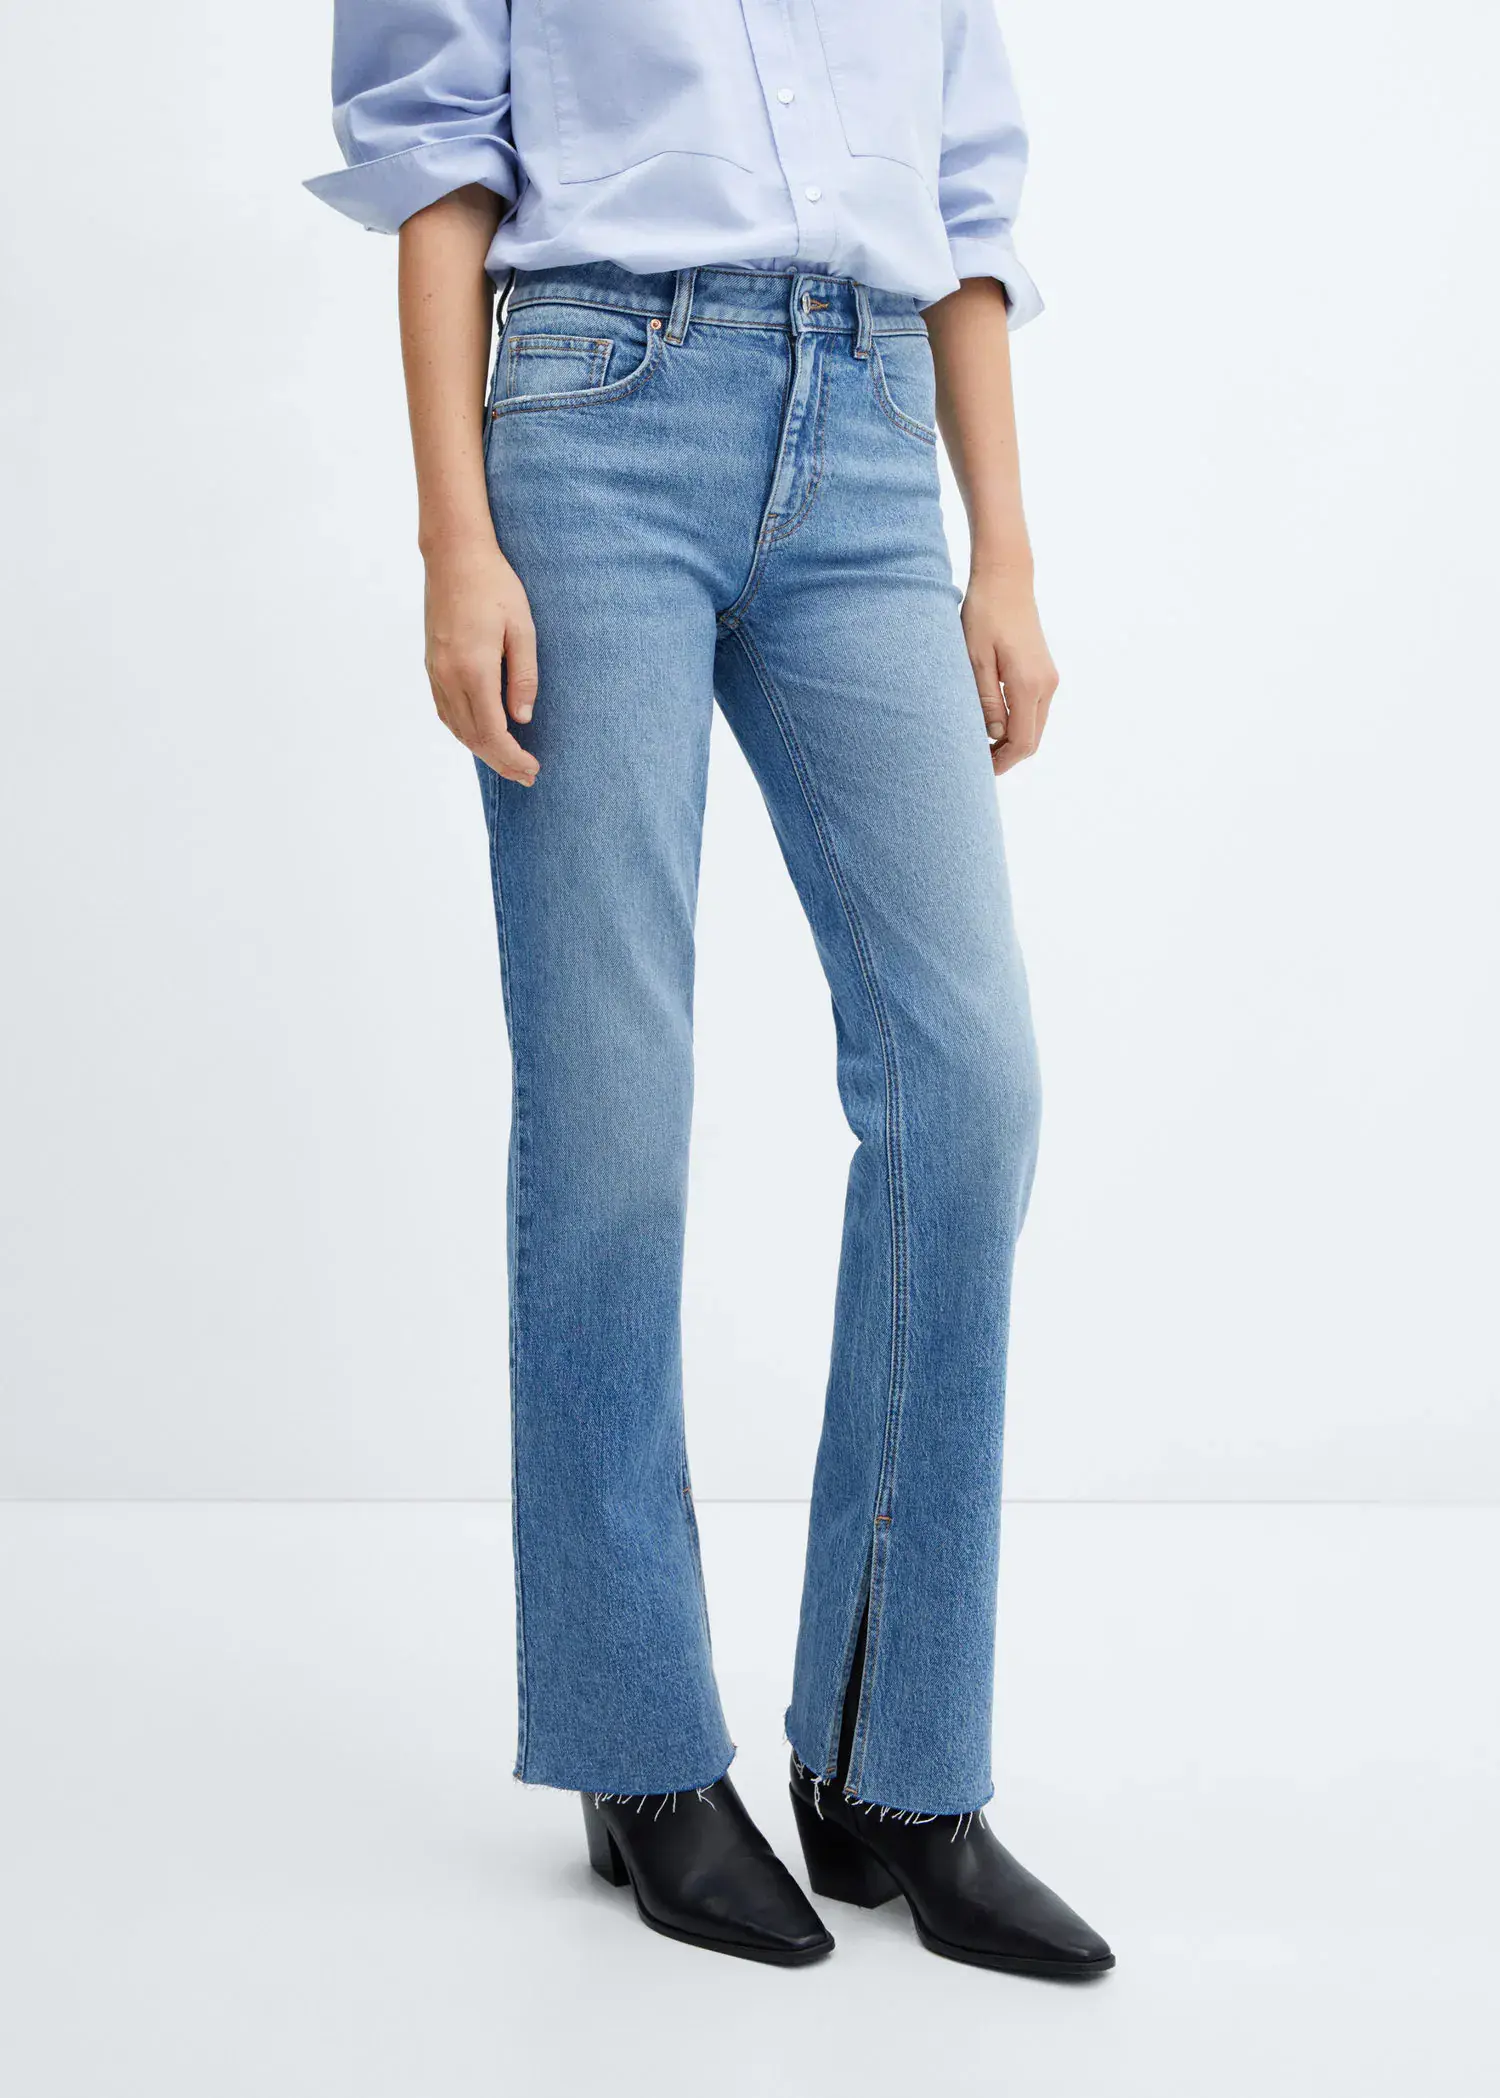 Mango Medium-rise straight jeans with slits. 2